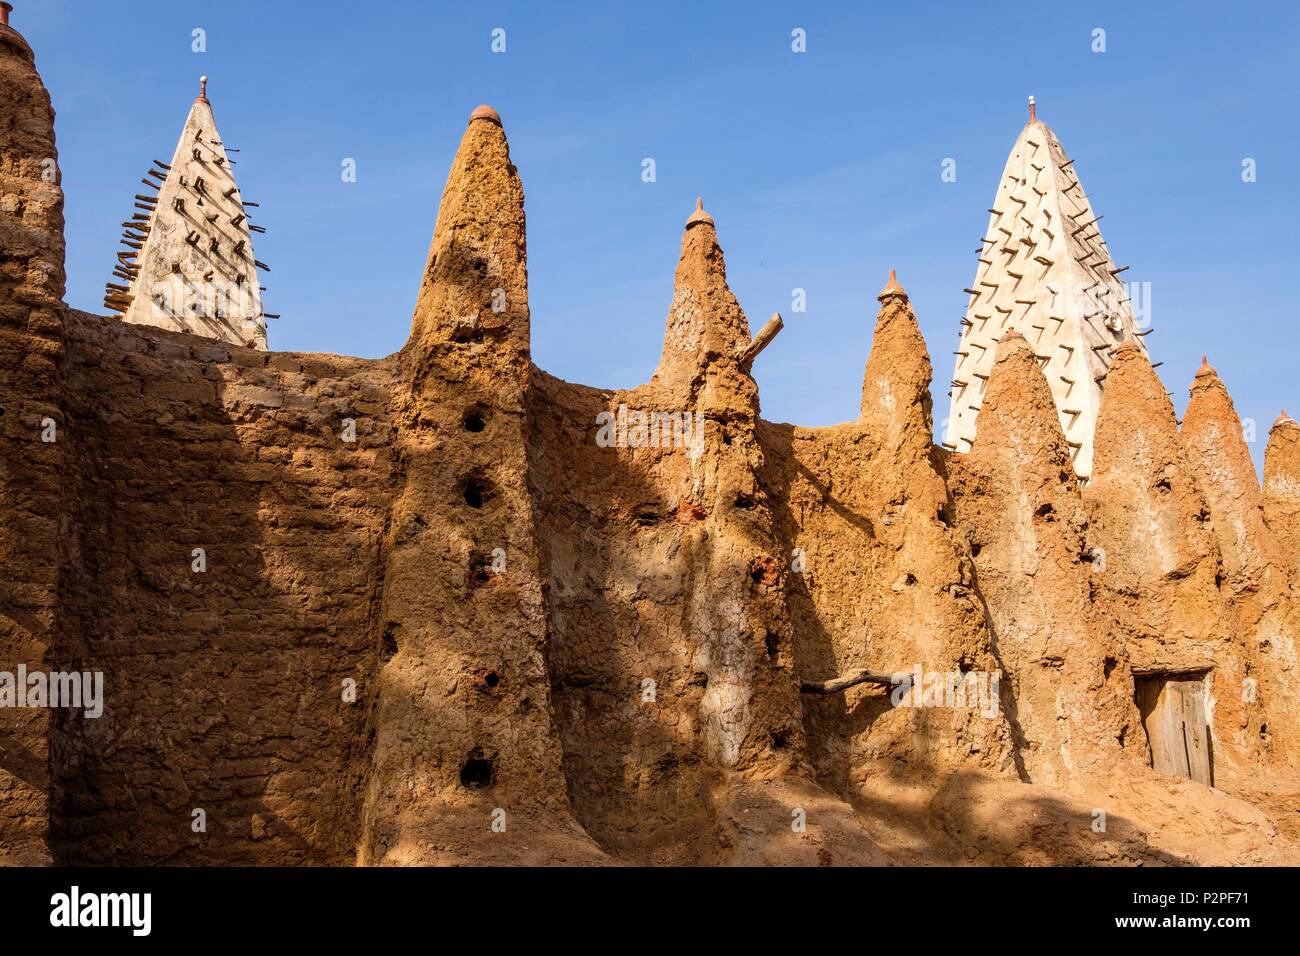 Le Burkina Faso, région Hauts-Bassins, Bobo-Dioulasso, mosquée Dioulassoba Banque D'Images